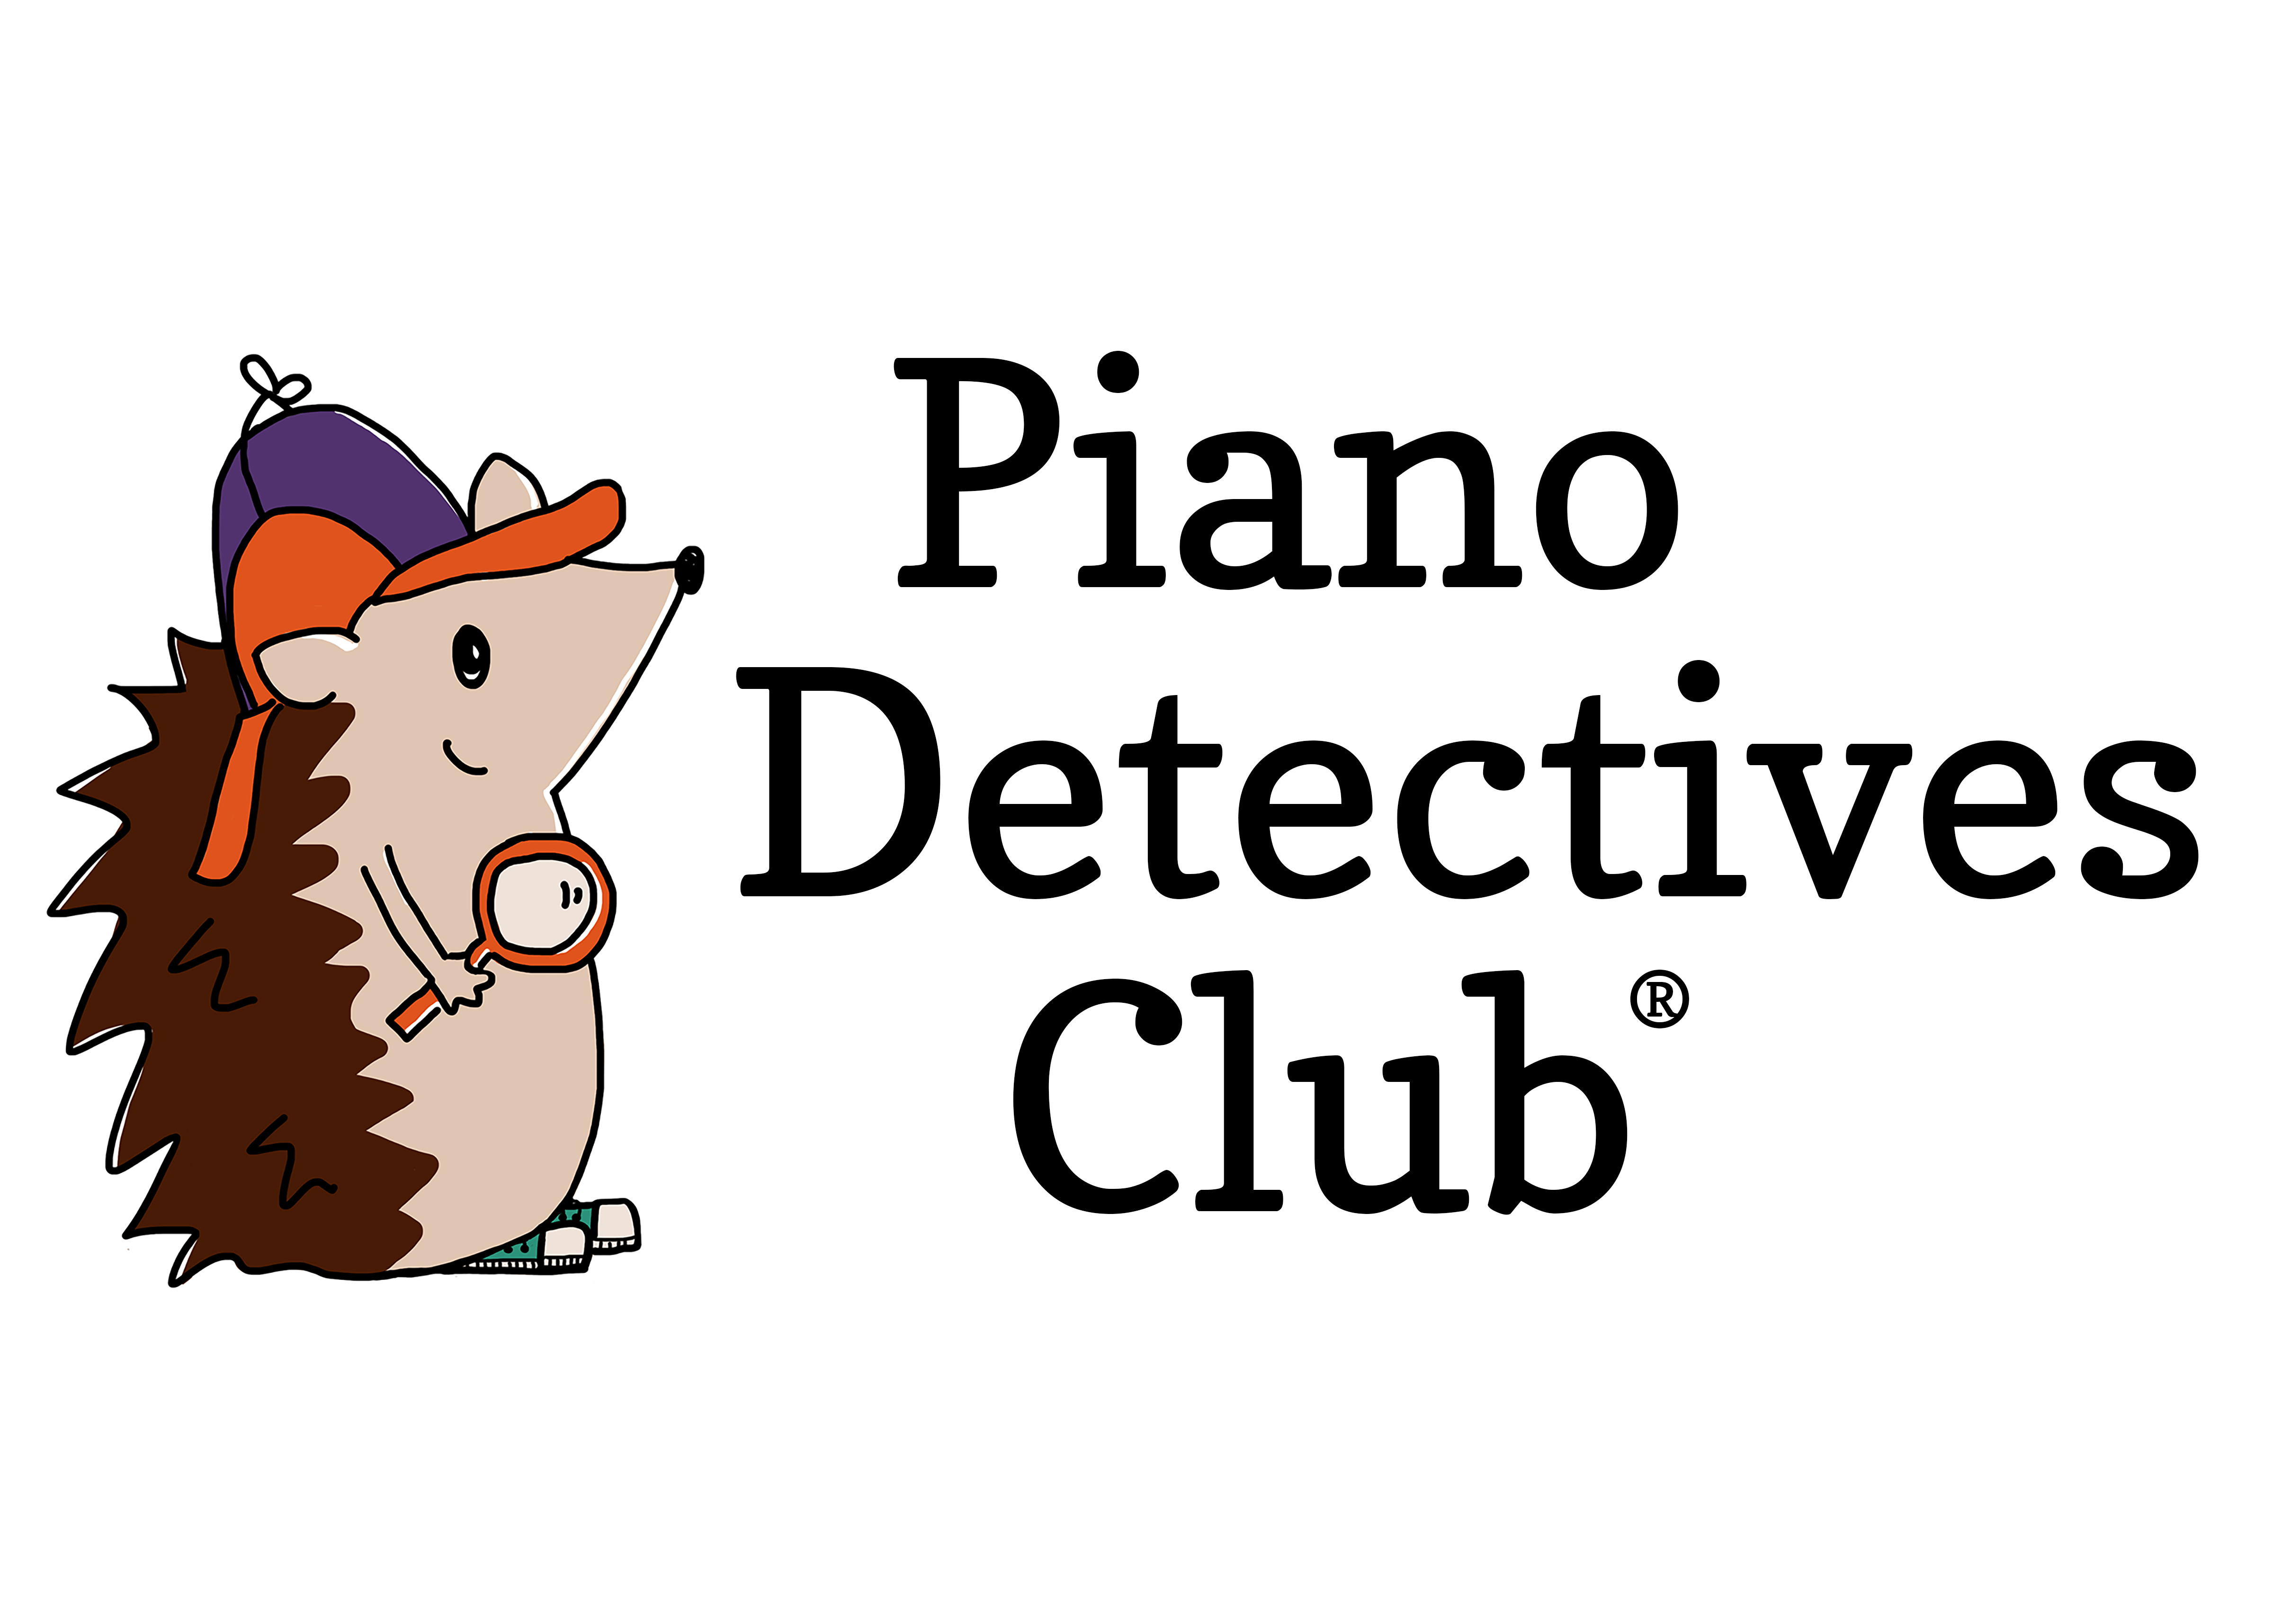 Piano Detectives Club logo